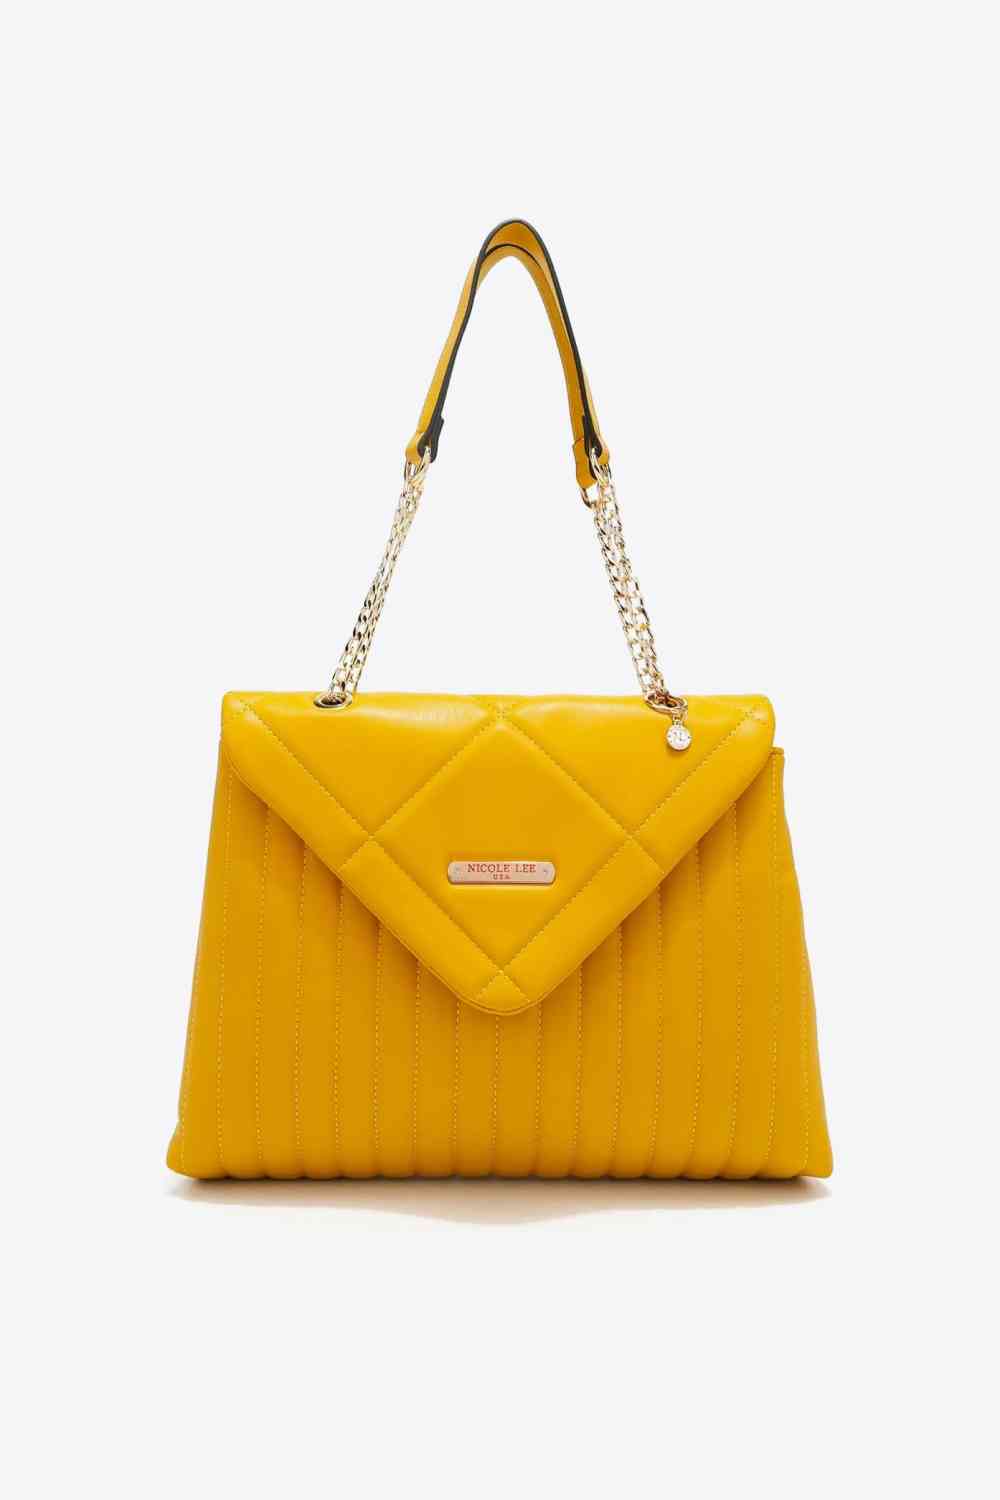 Nicole Lee USA A Nice Touch Handbag Mustard One Size